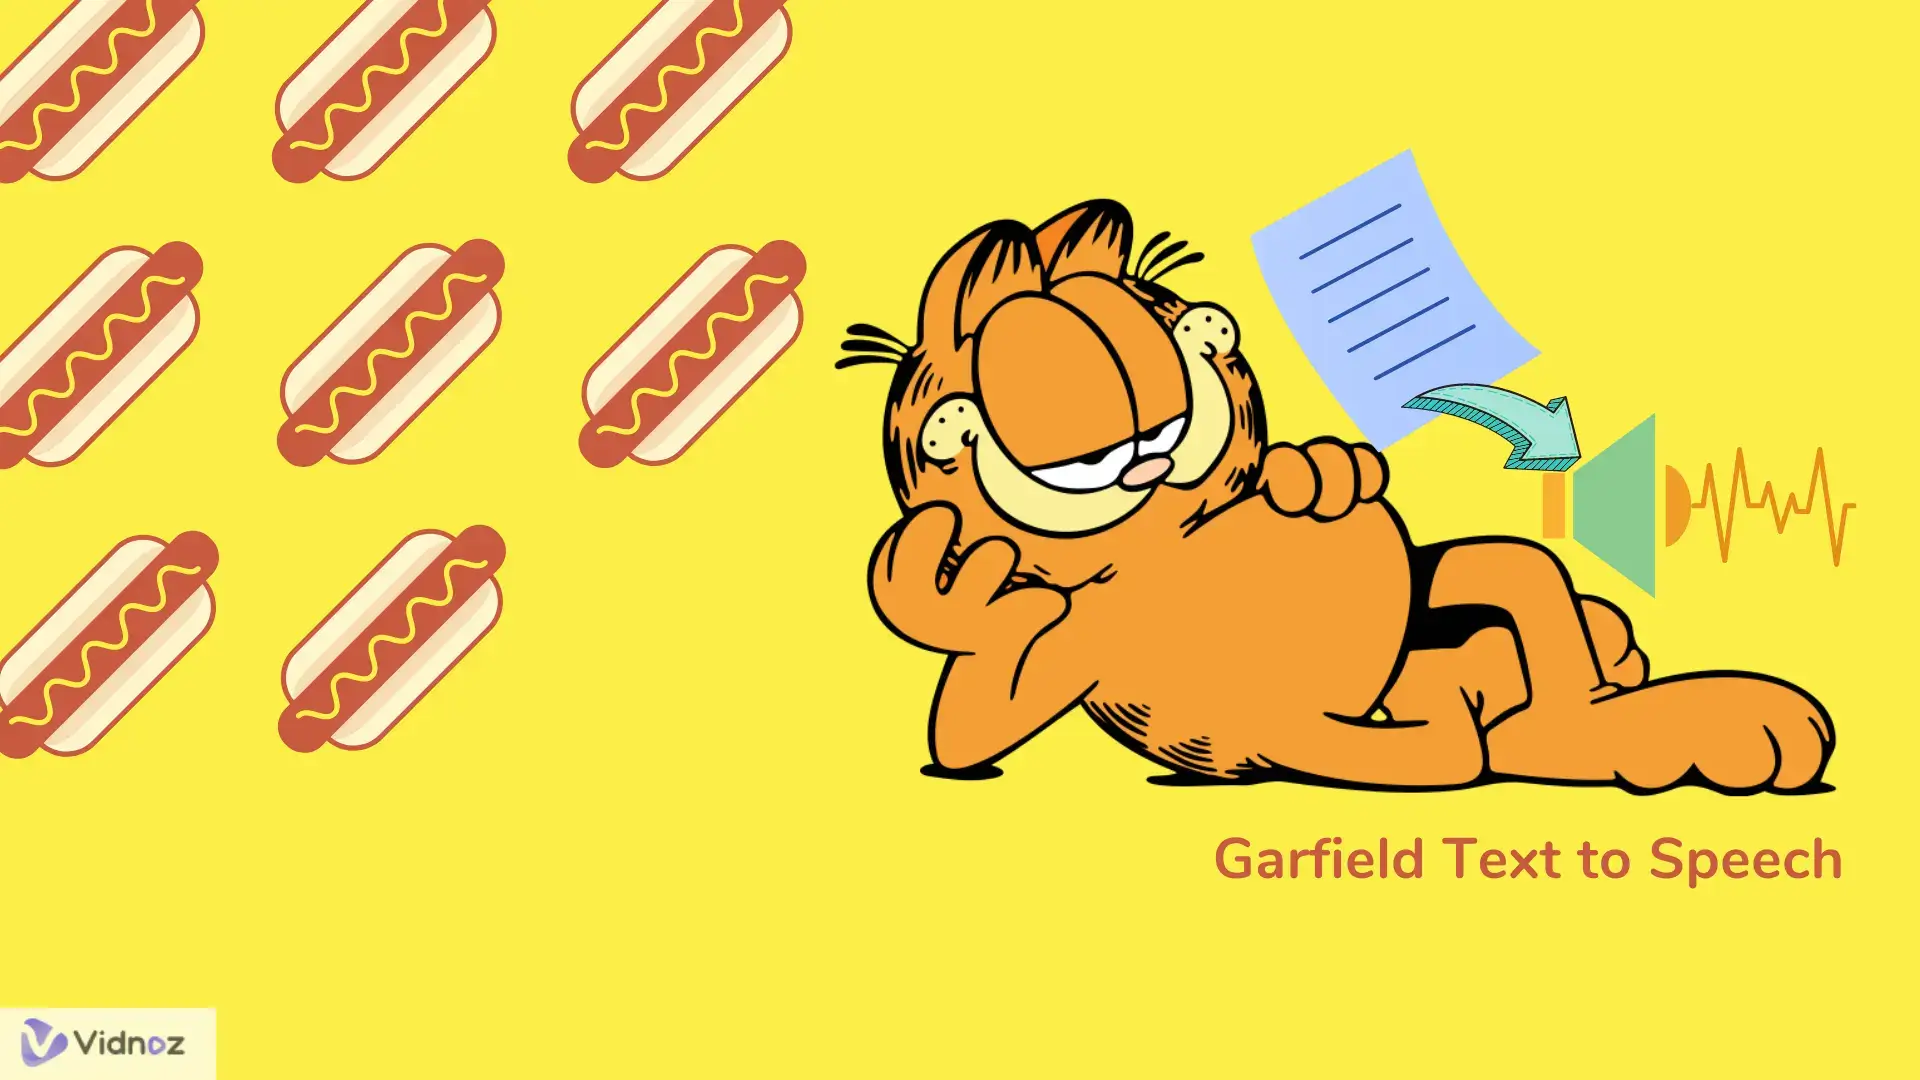 How to Create Garfield AI Voice Through Free Online AI Garfield Text-to-Speech Generators [3 Ways]